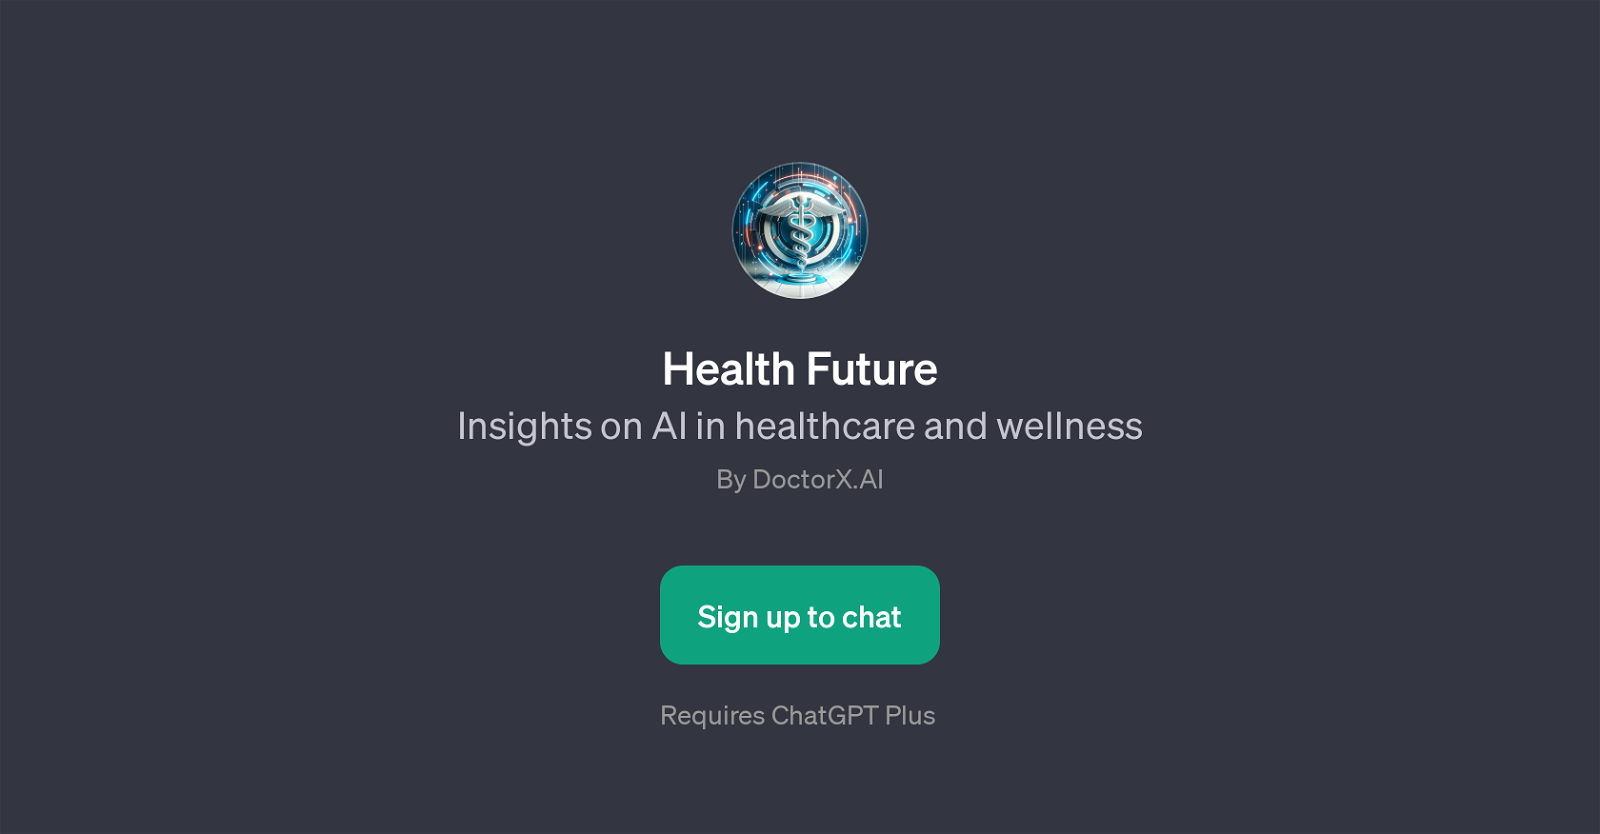 Health Future website